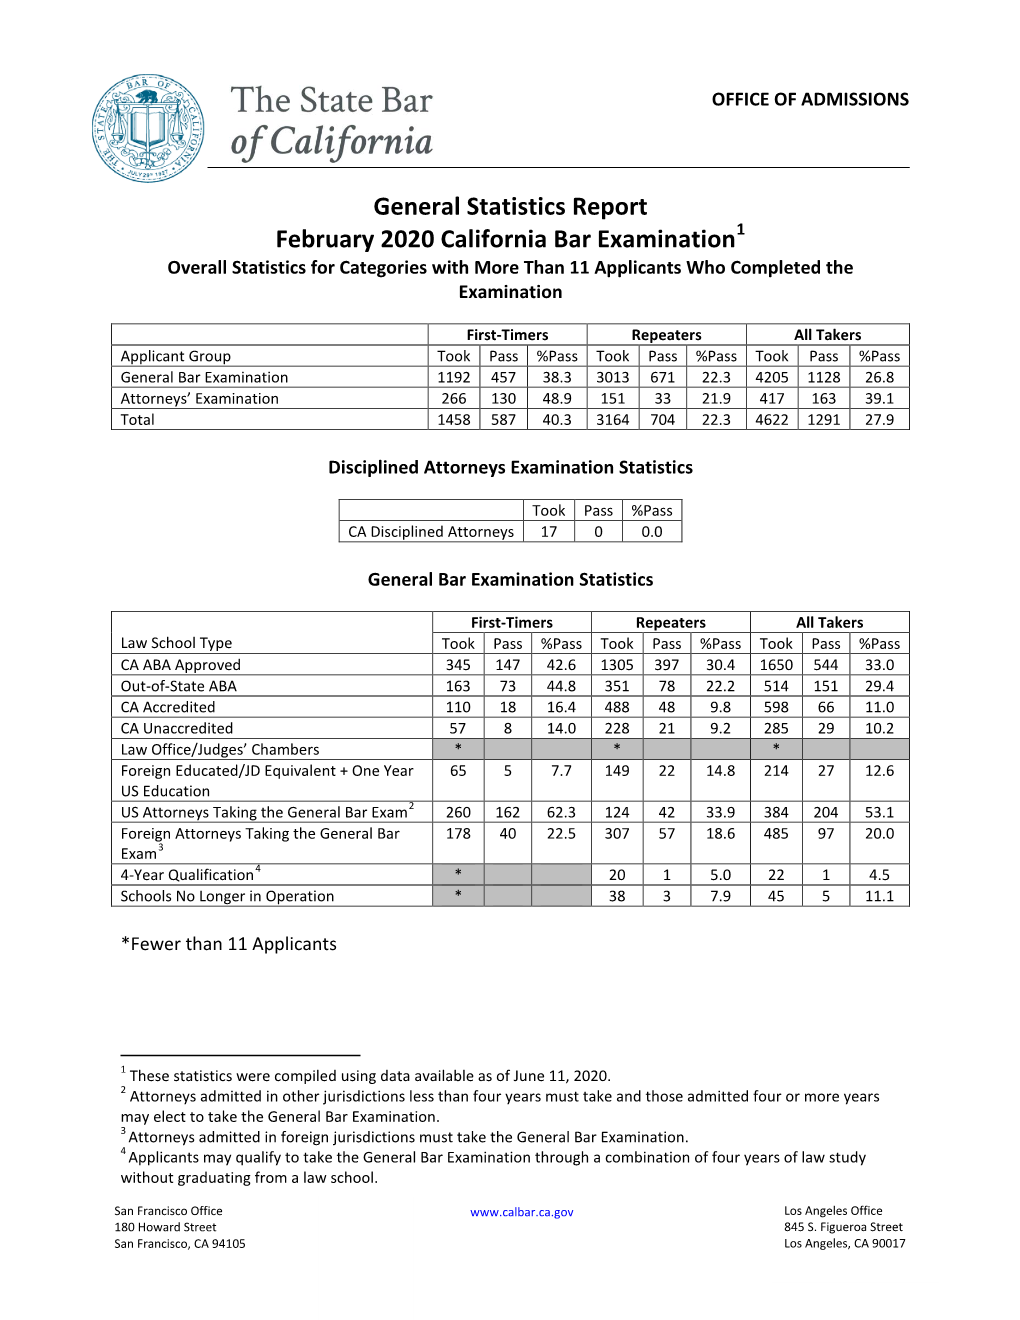 General Statistics Report: February 2020 California Bar Examination